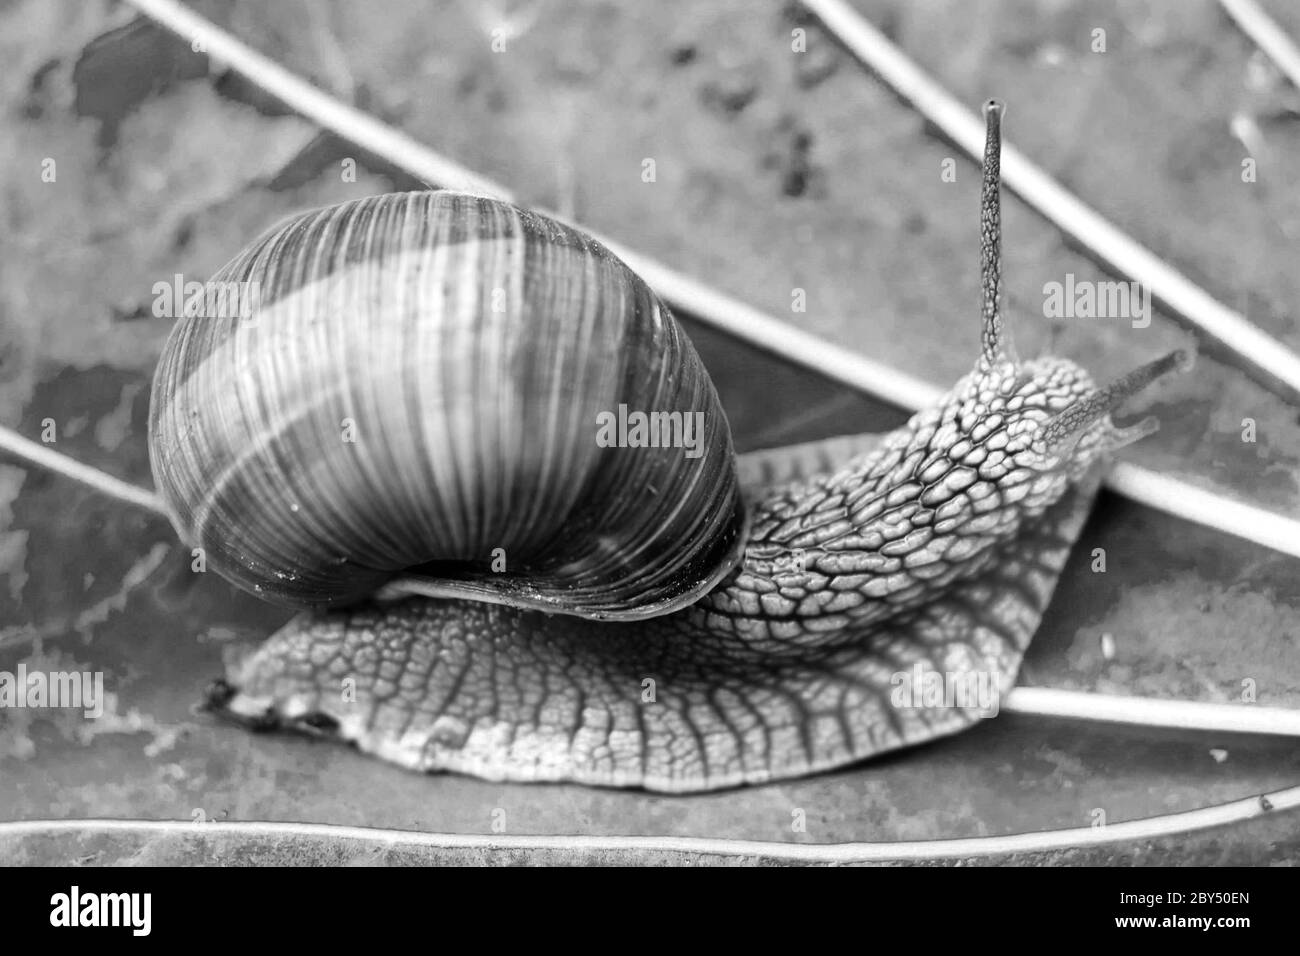 Snail on a leaf close up Stock Photo